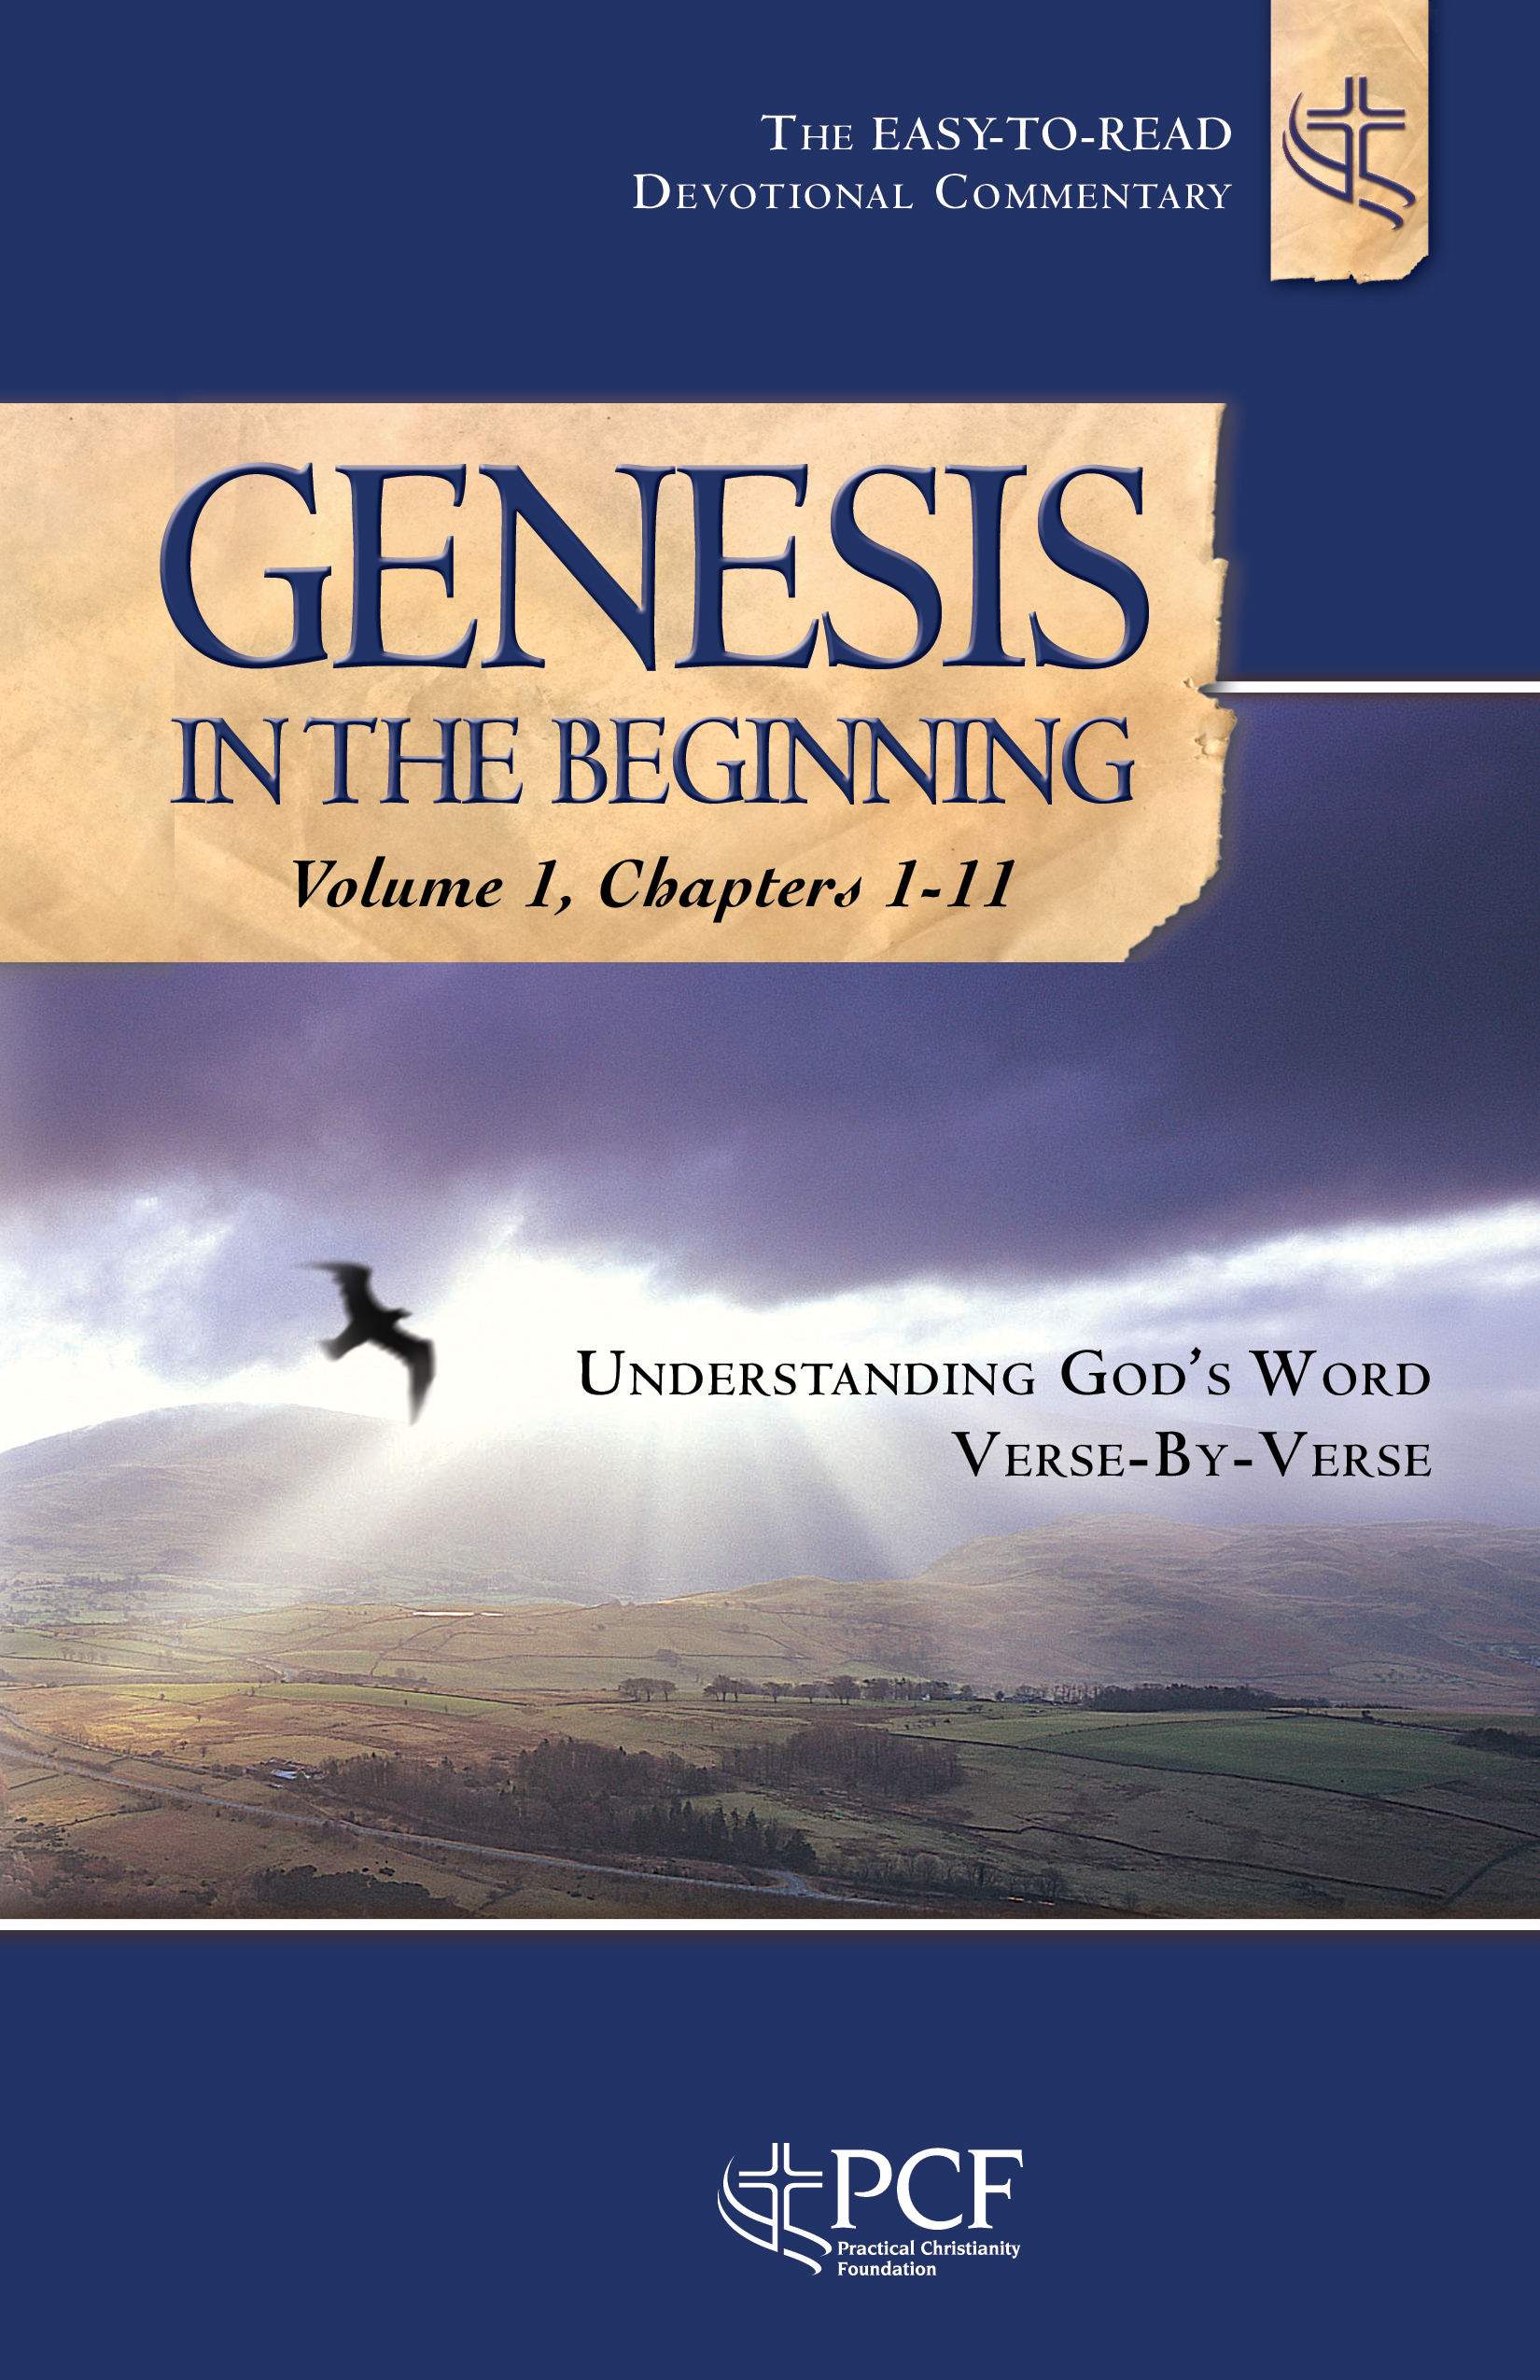 Genesis volume 1, chapters 1-11 Devotional Study